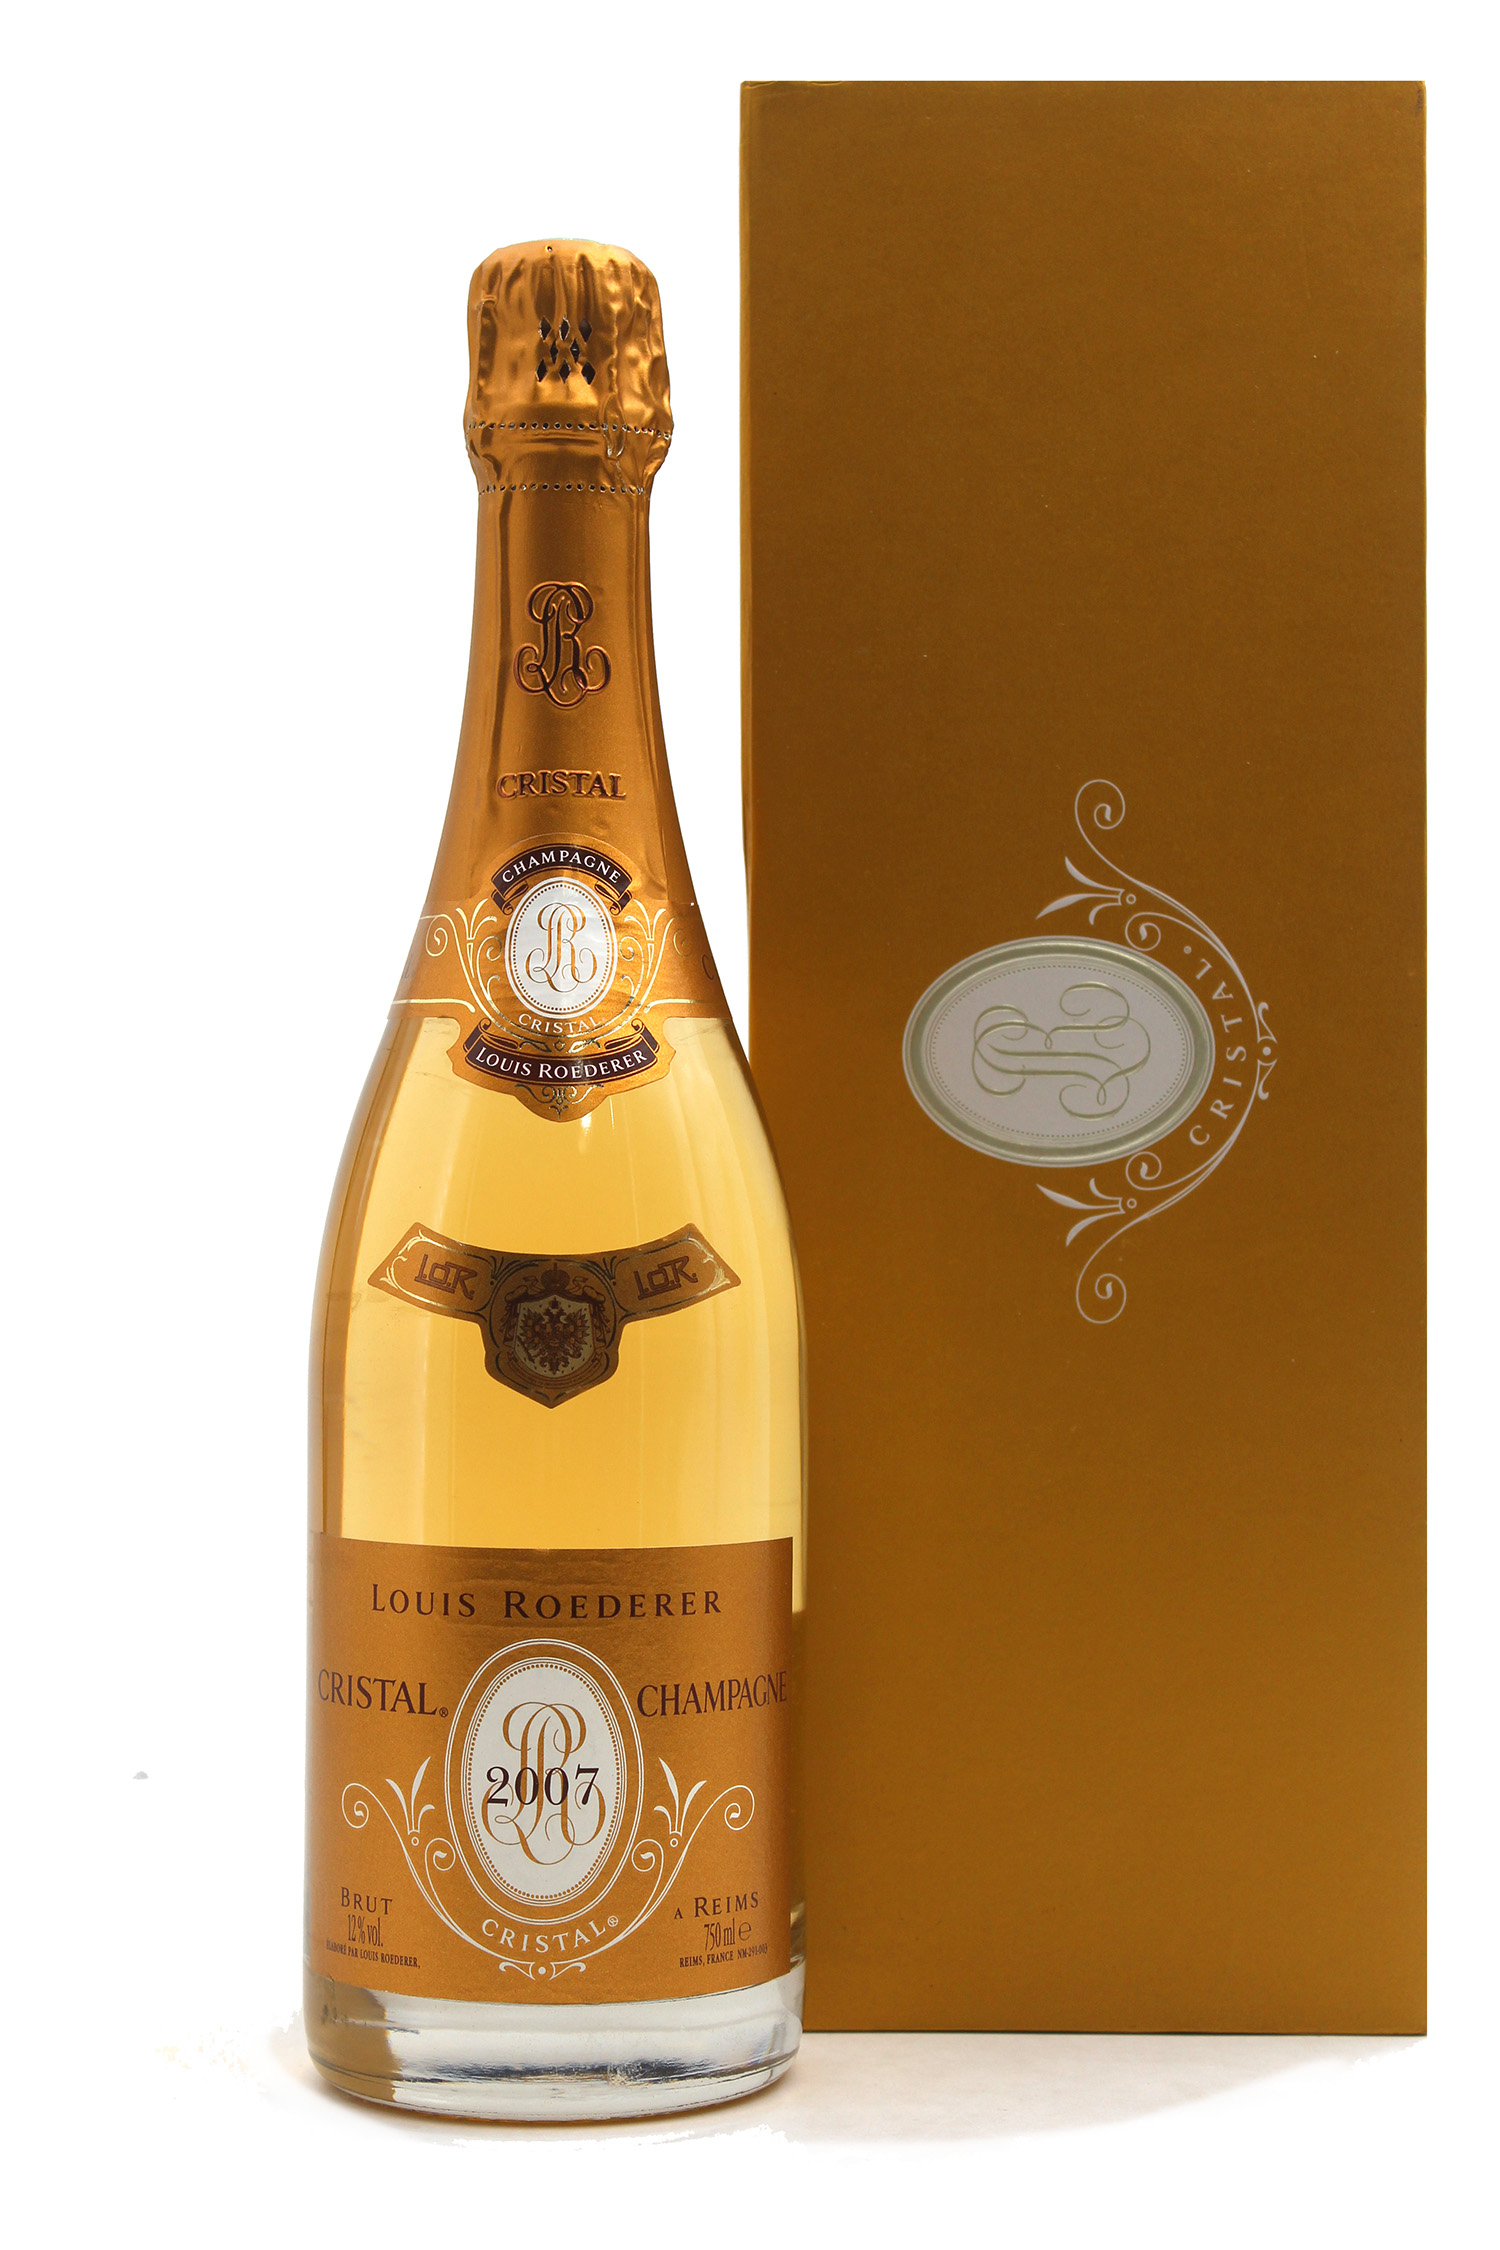 Champagne Cristal Louis Roederer 2007 - 75cl